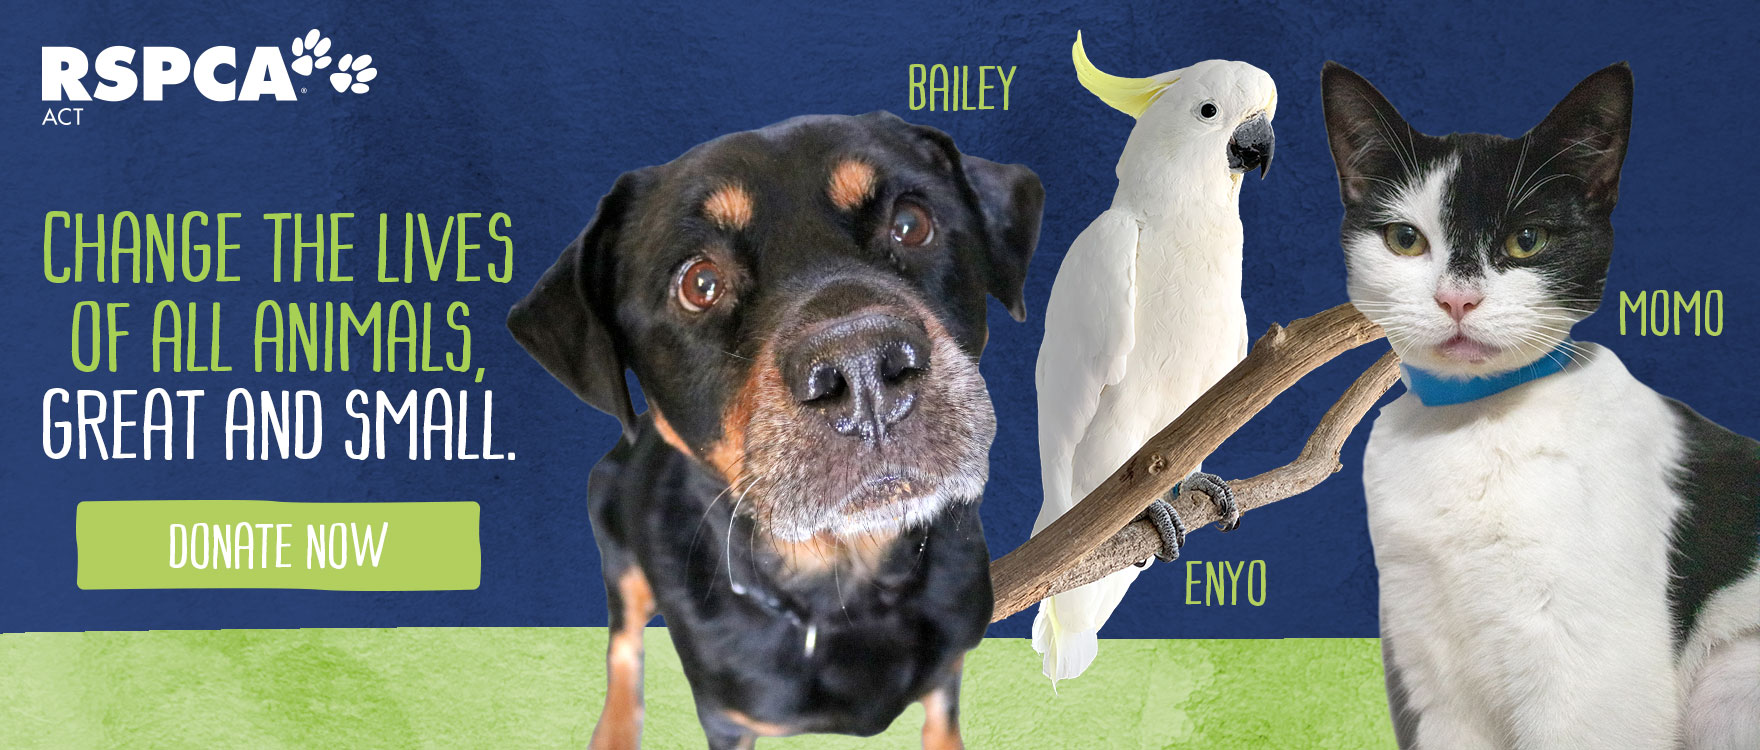 Help animals like Bailey, Momo & Enyo